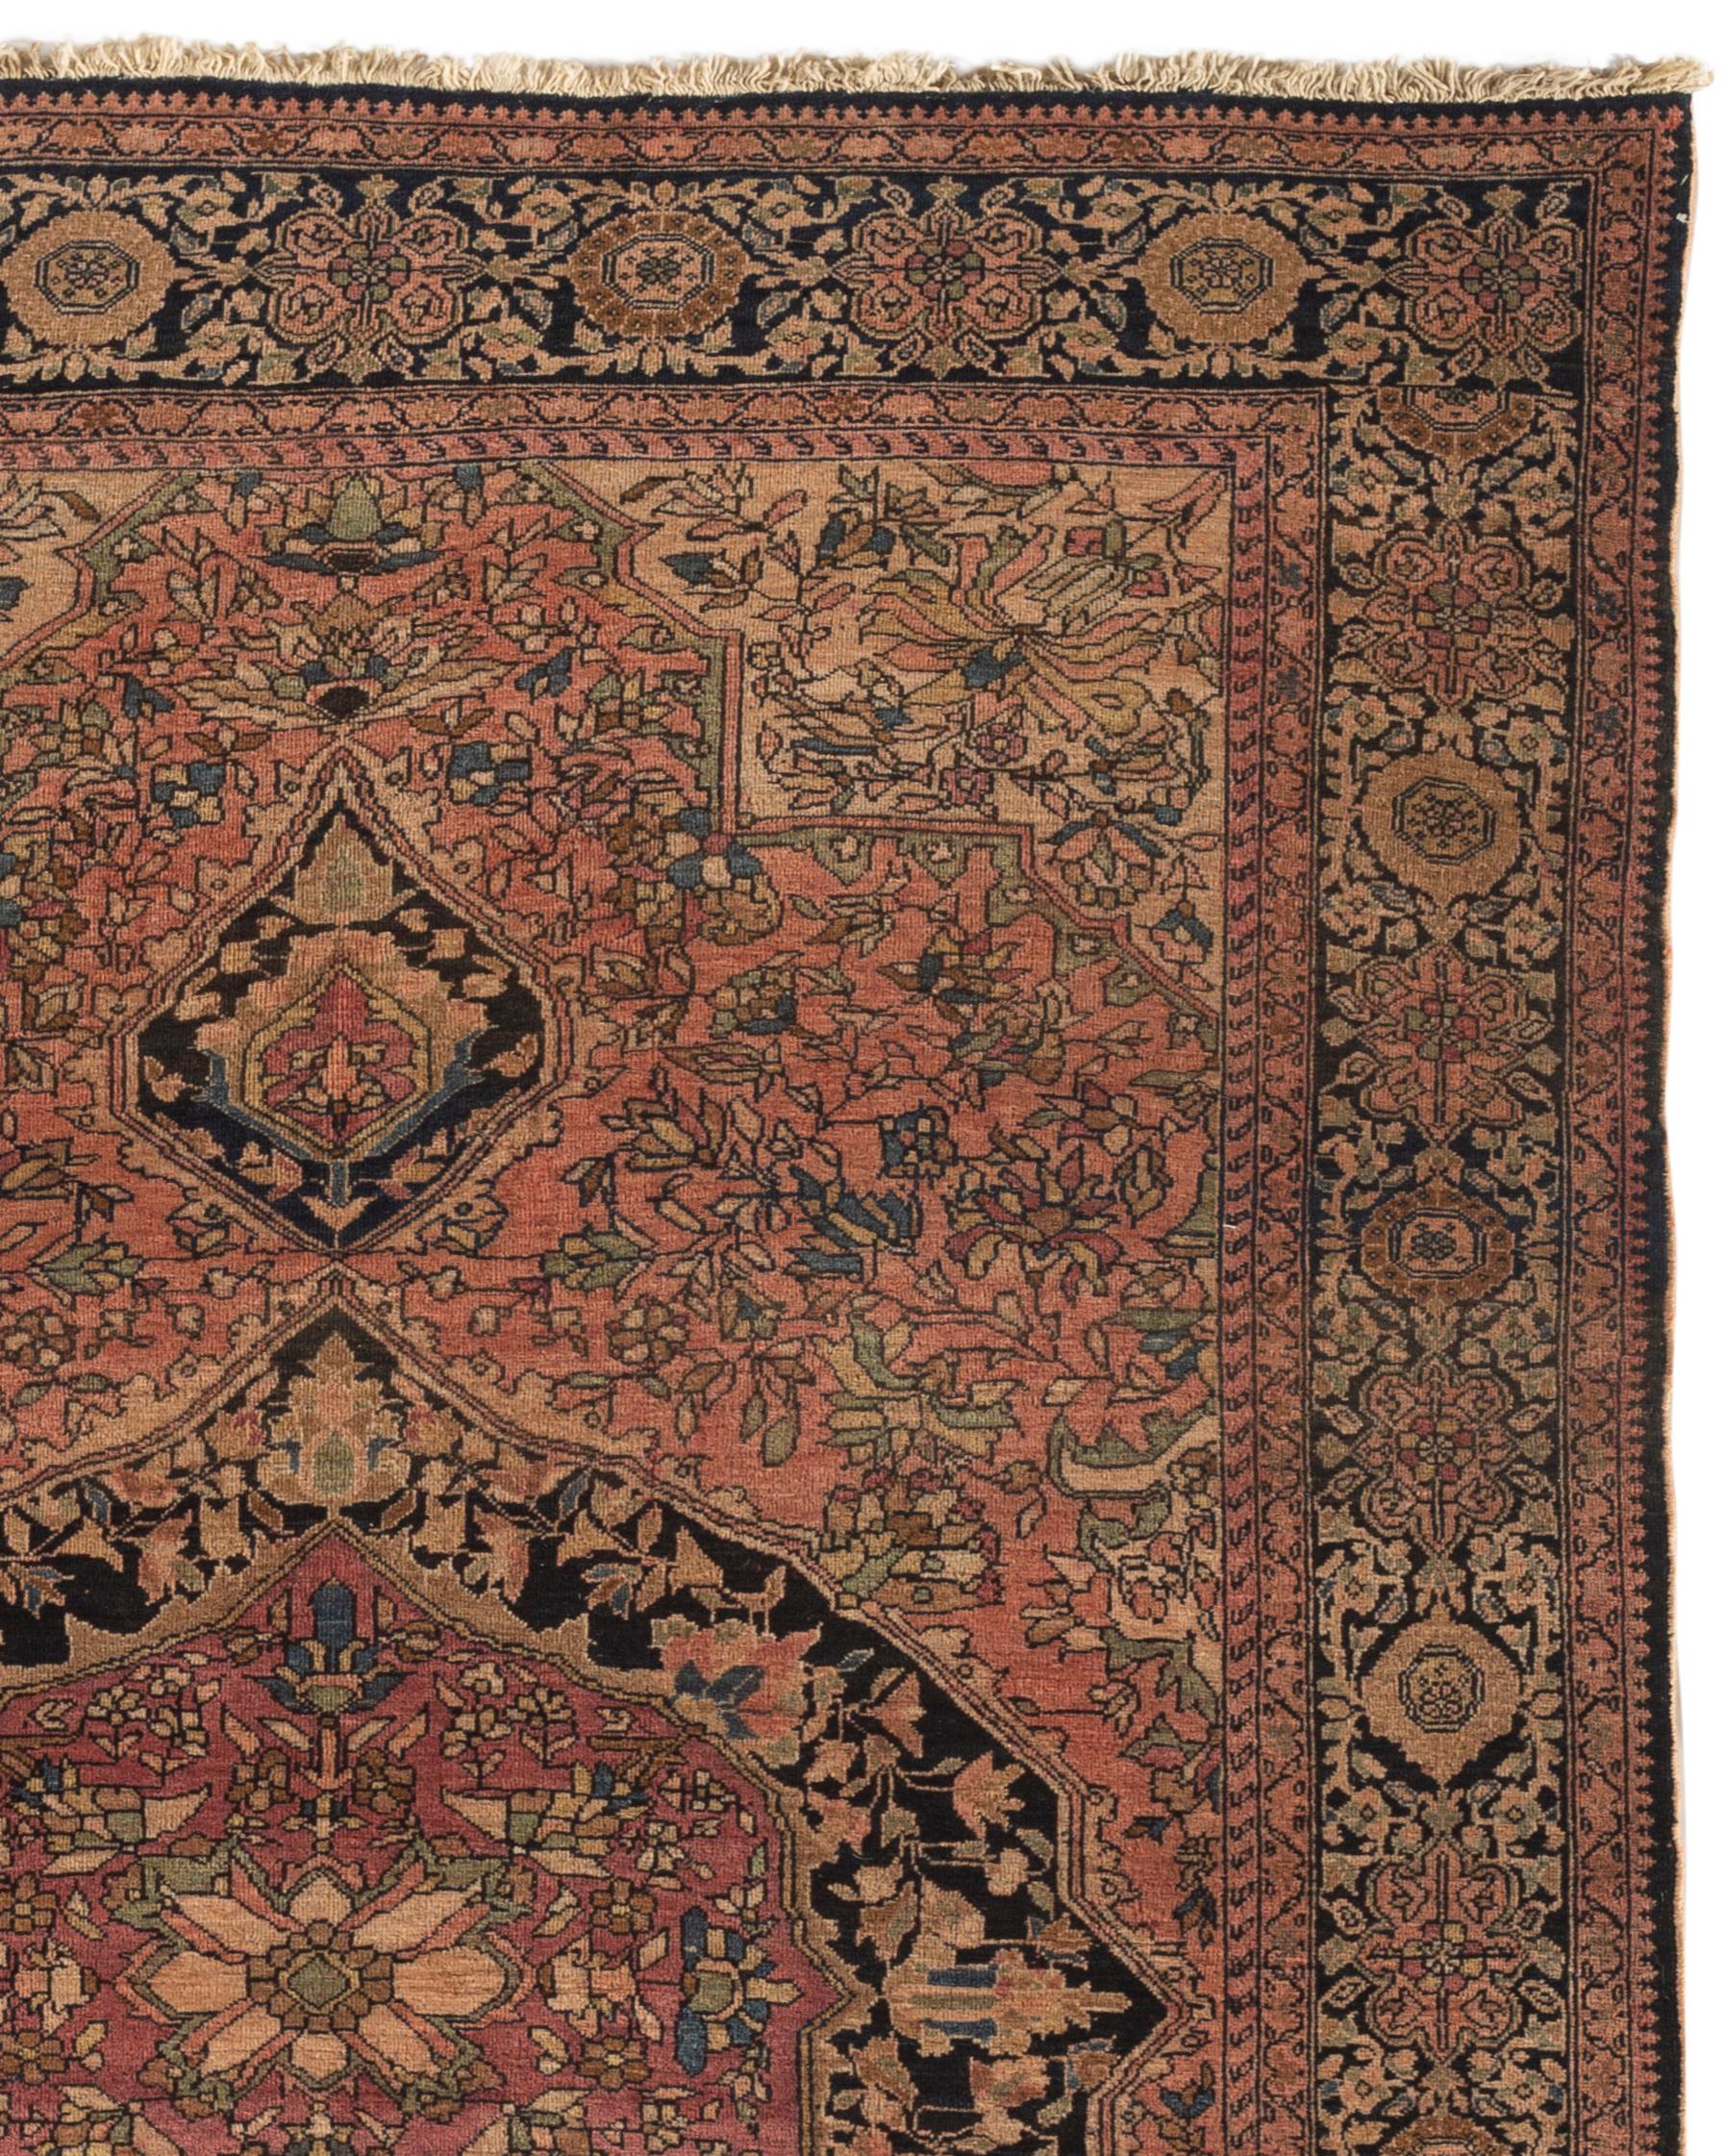 Antique Persian Farahan Sarouk Rug, circa 1880 In Good Condition For Sale In Secaucus, NJ